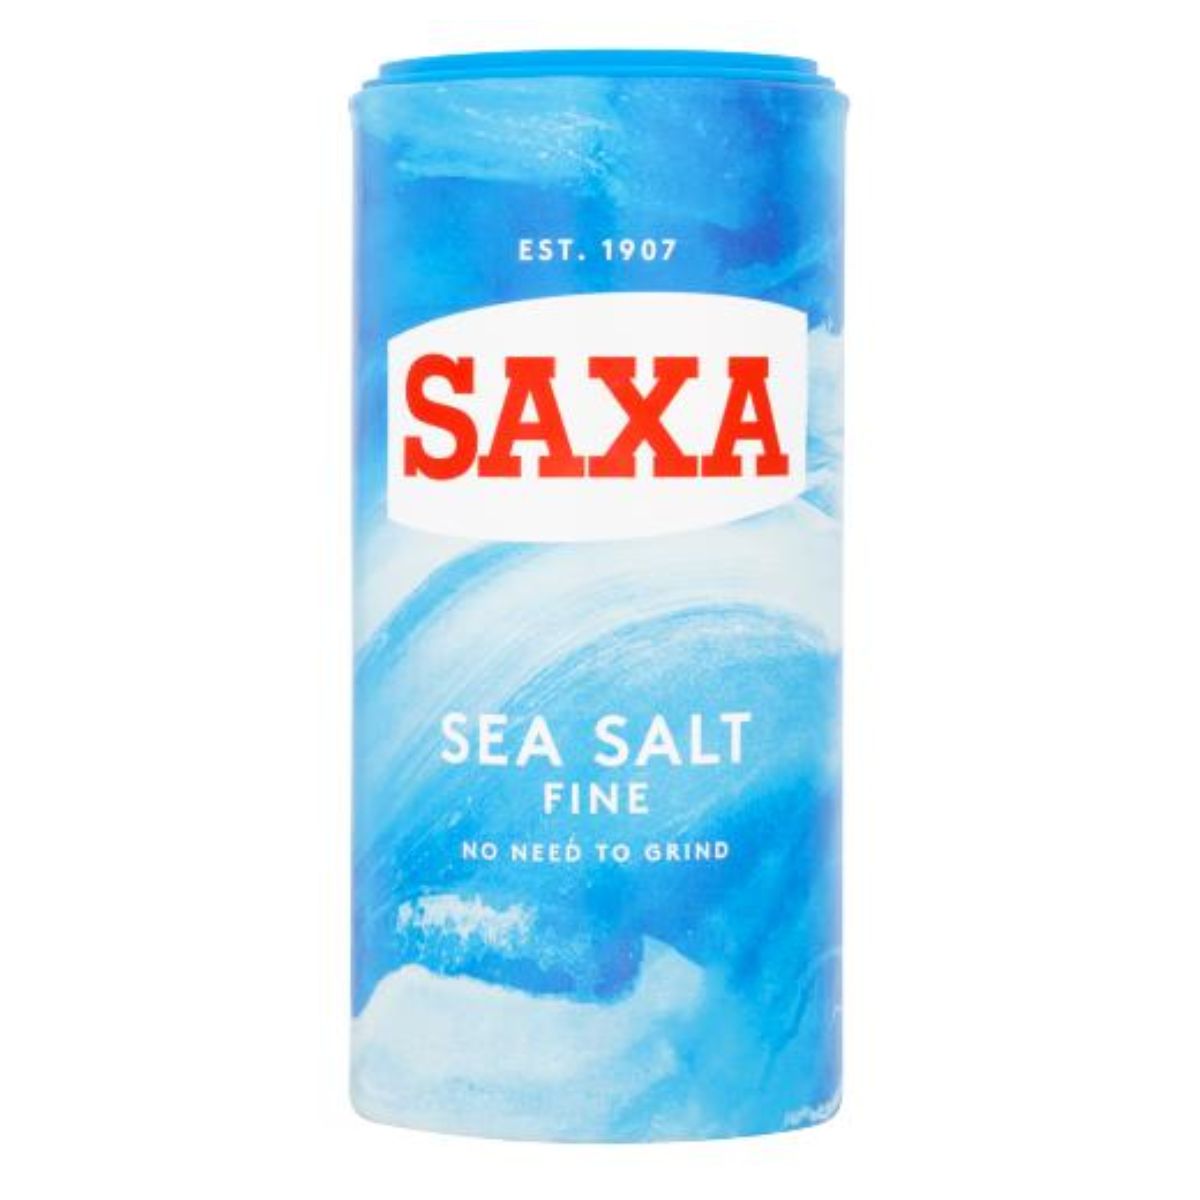 Saxa - Fine Sea Salt - 350g is fine.